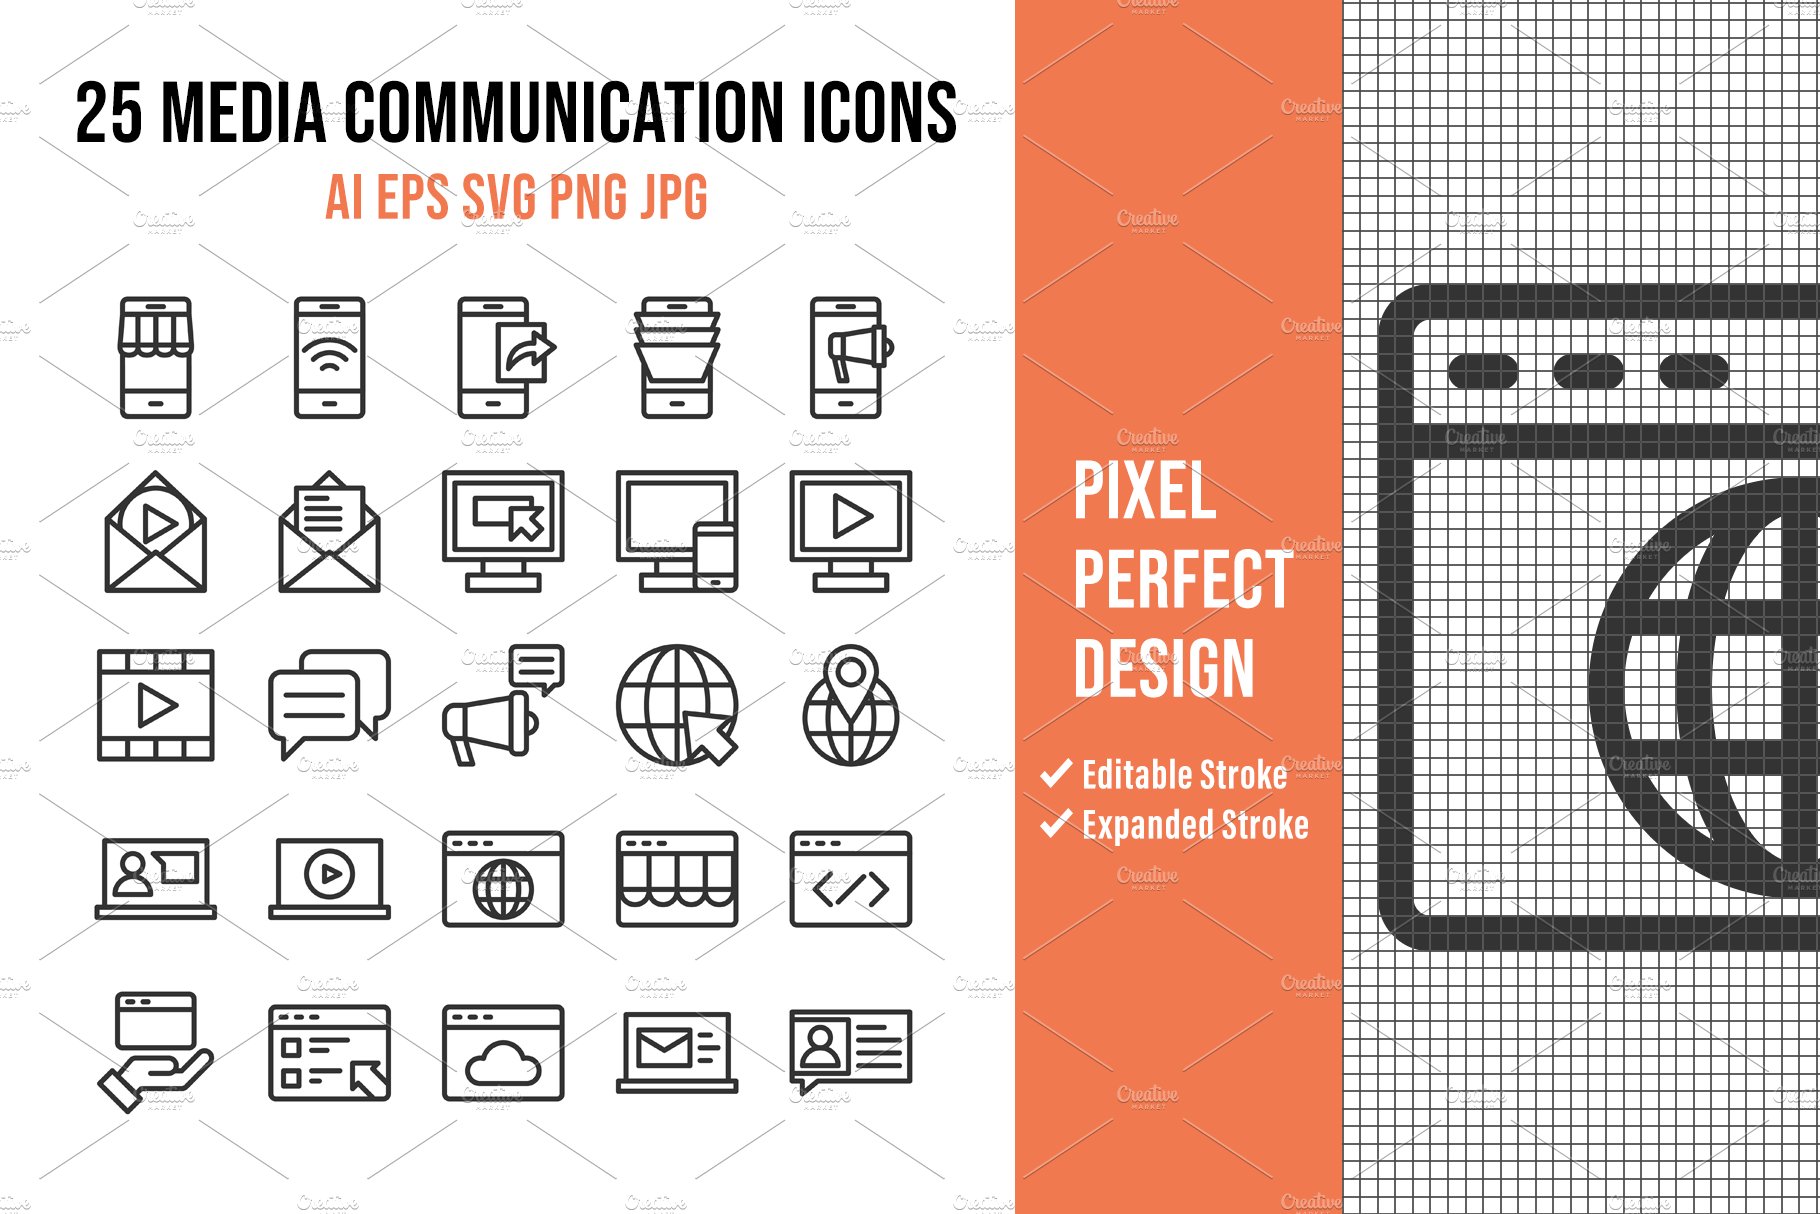 25 Media Communication Icons cover image.